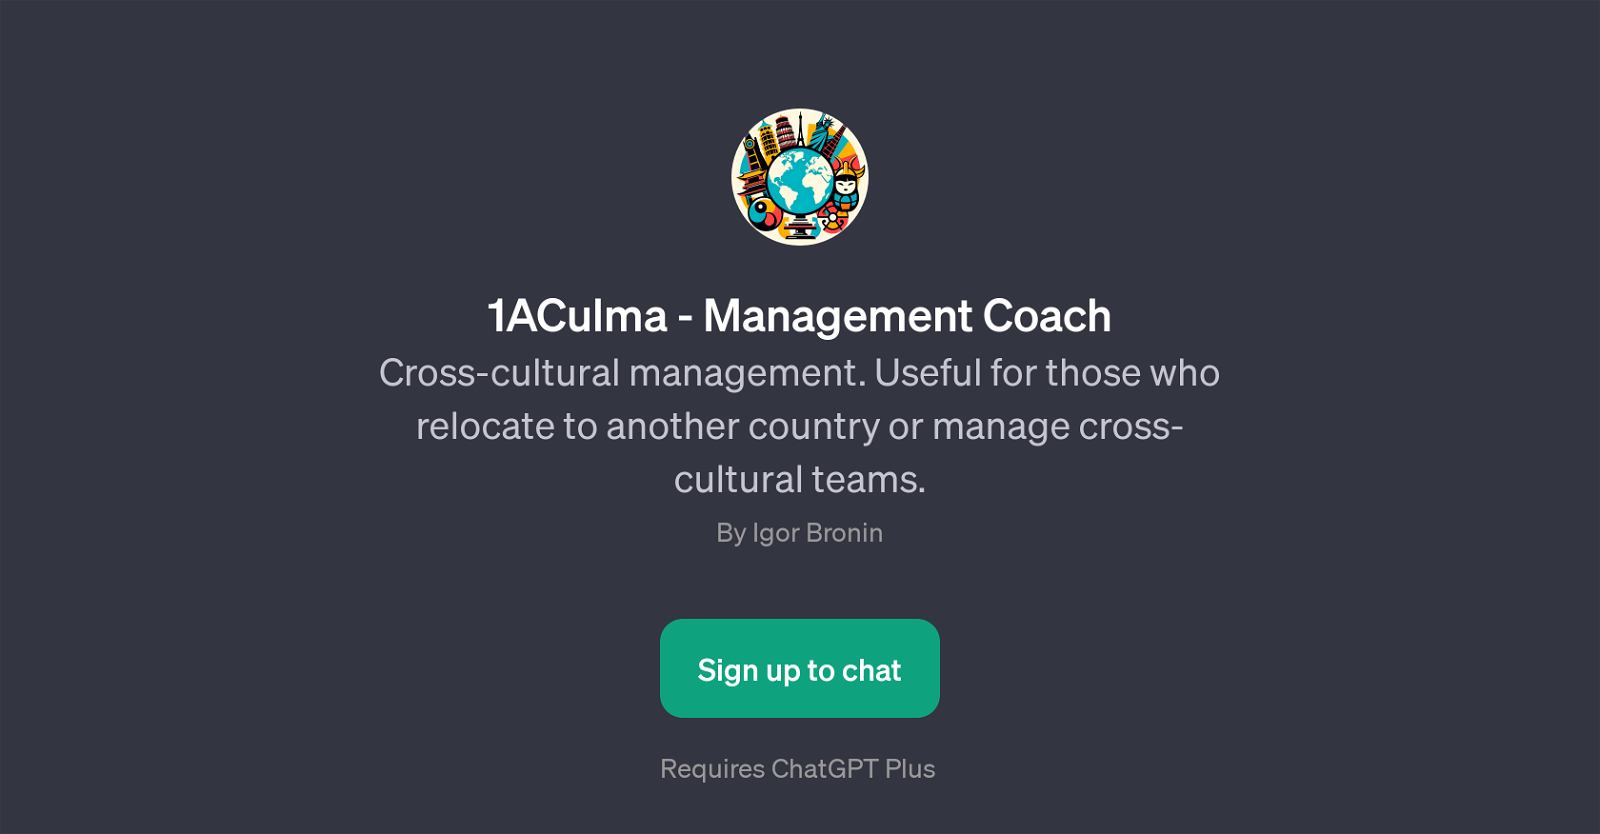 1ACulma - Management Coach website